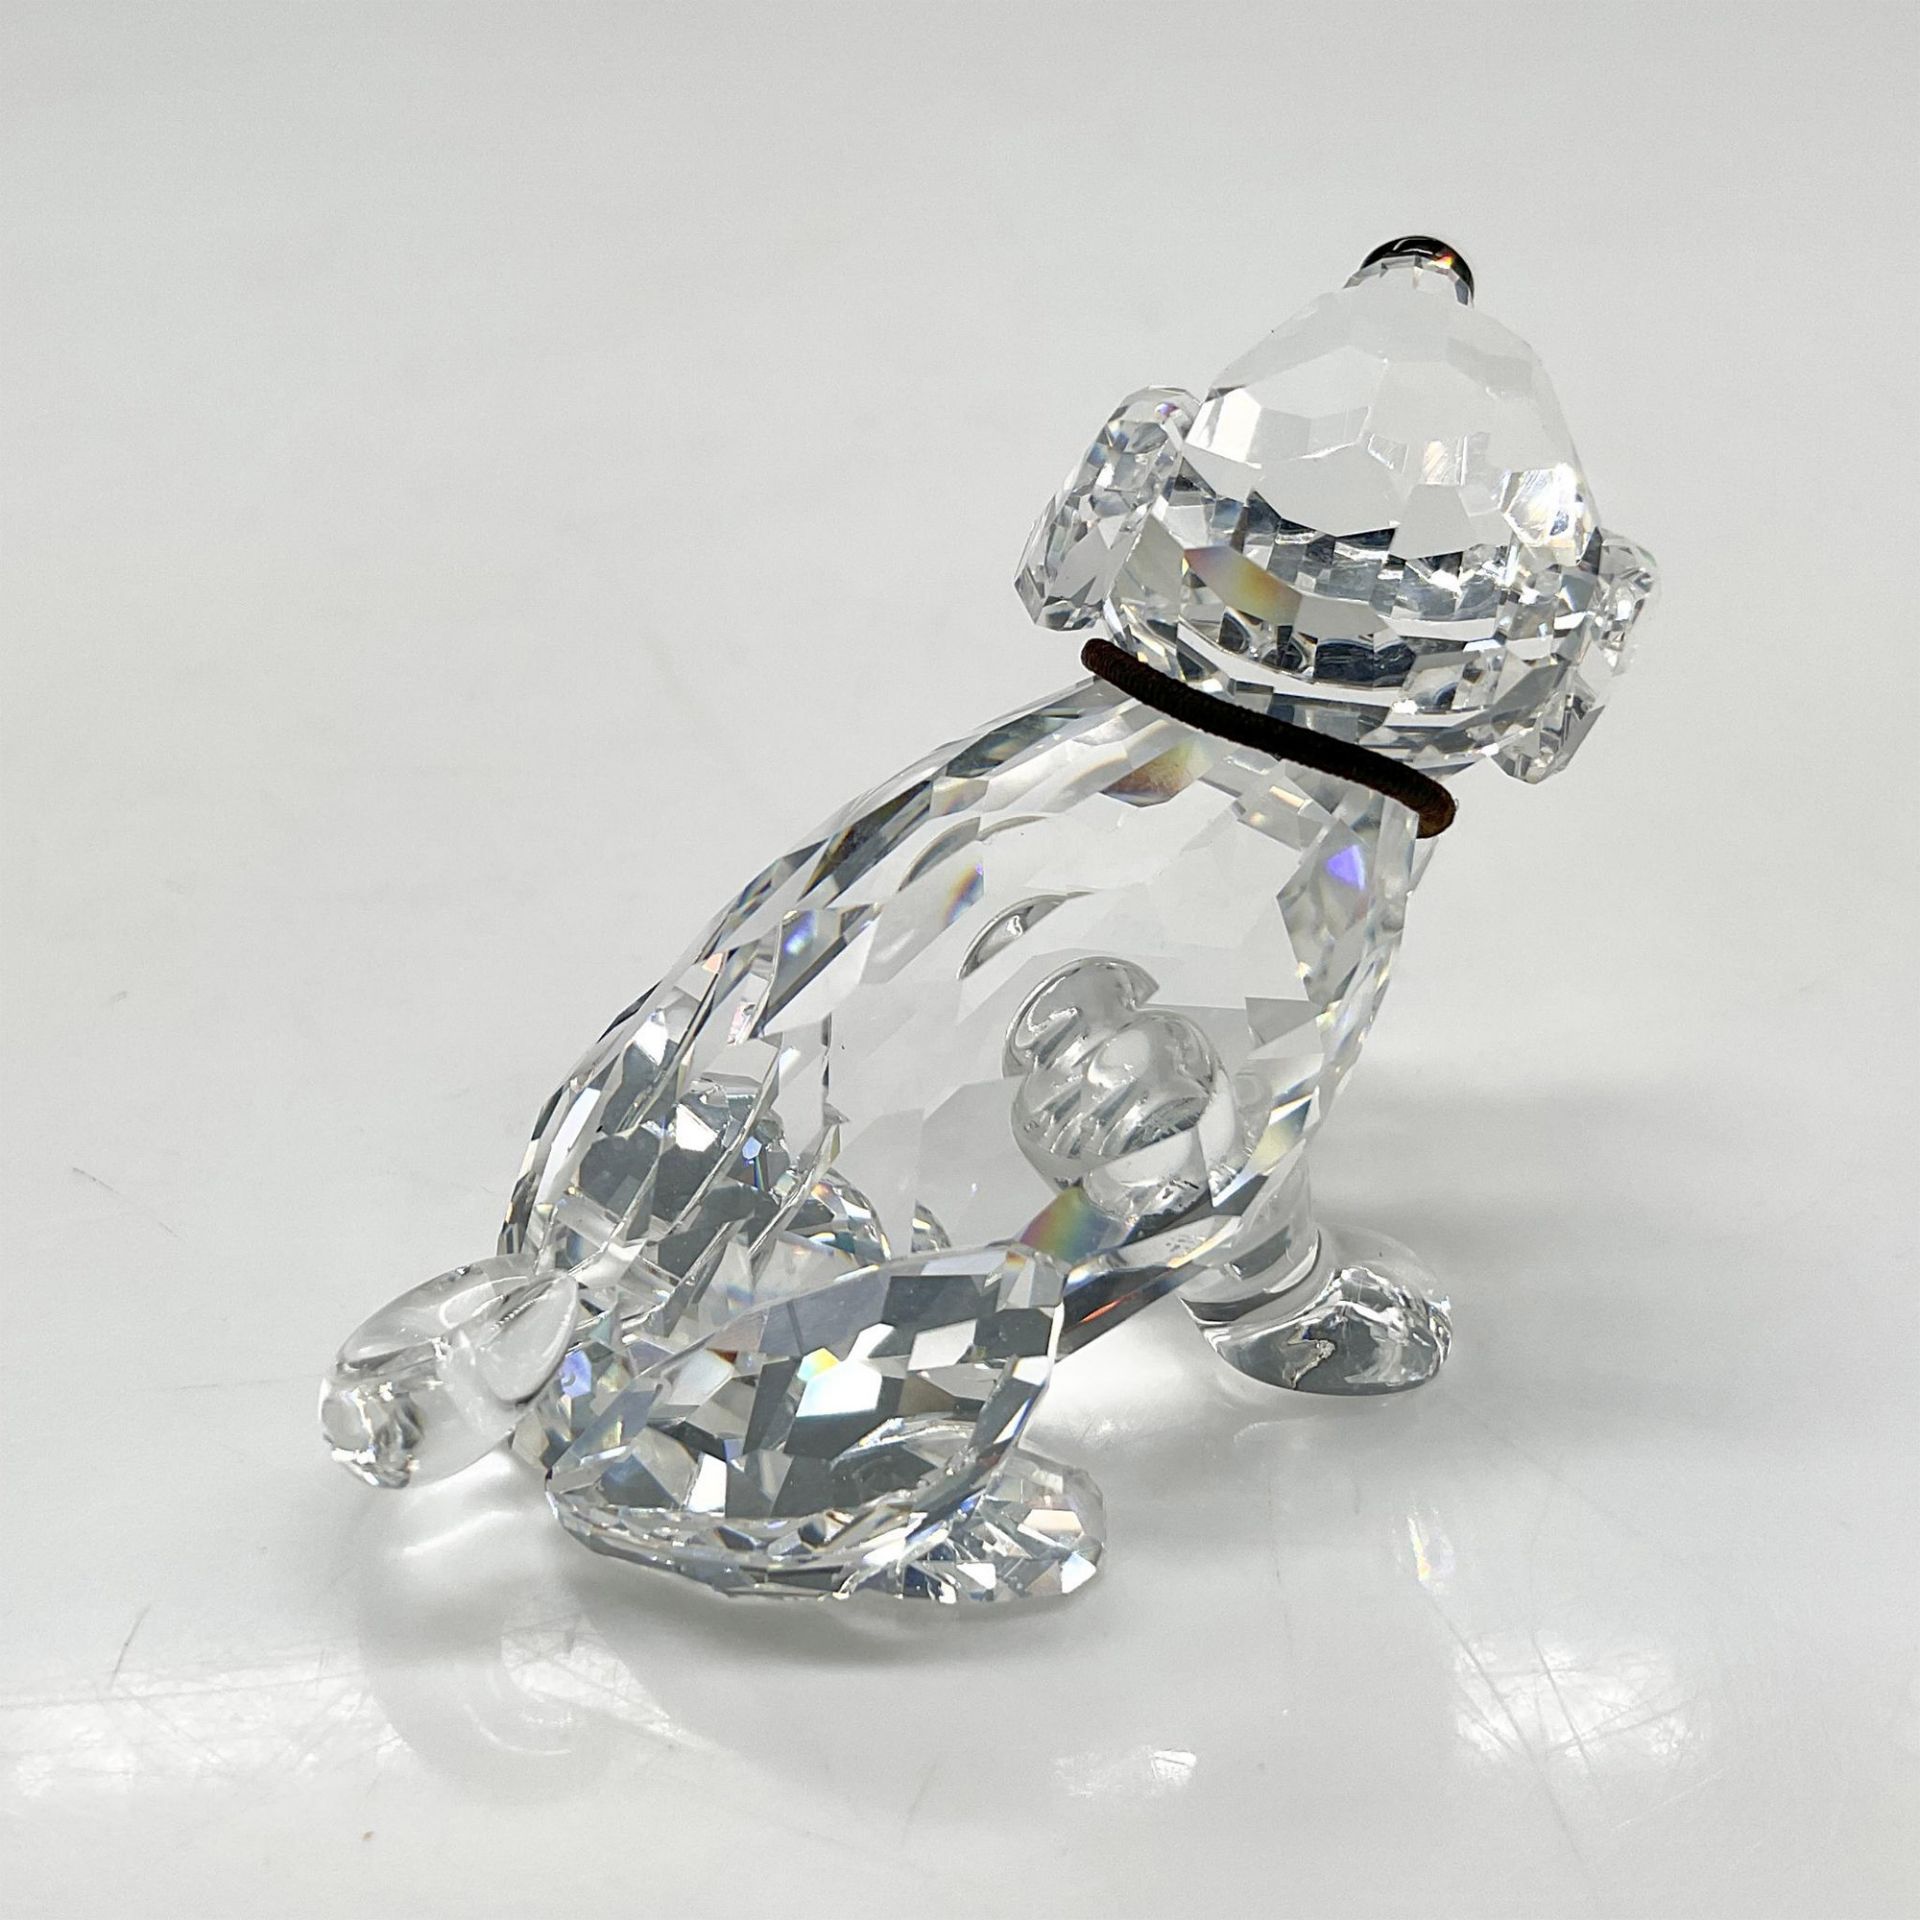 Swarovski Crystal Figurine, St. Bernard Puppy - Image 2 of 3